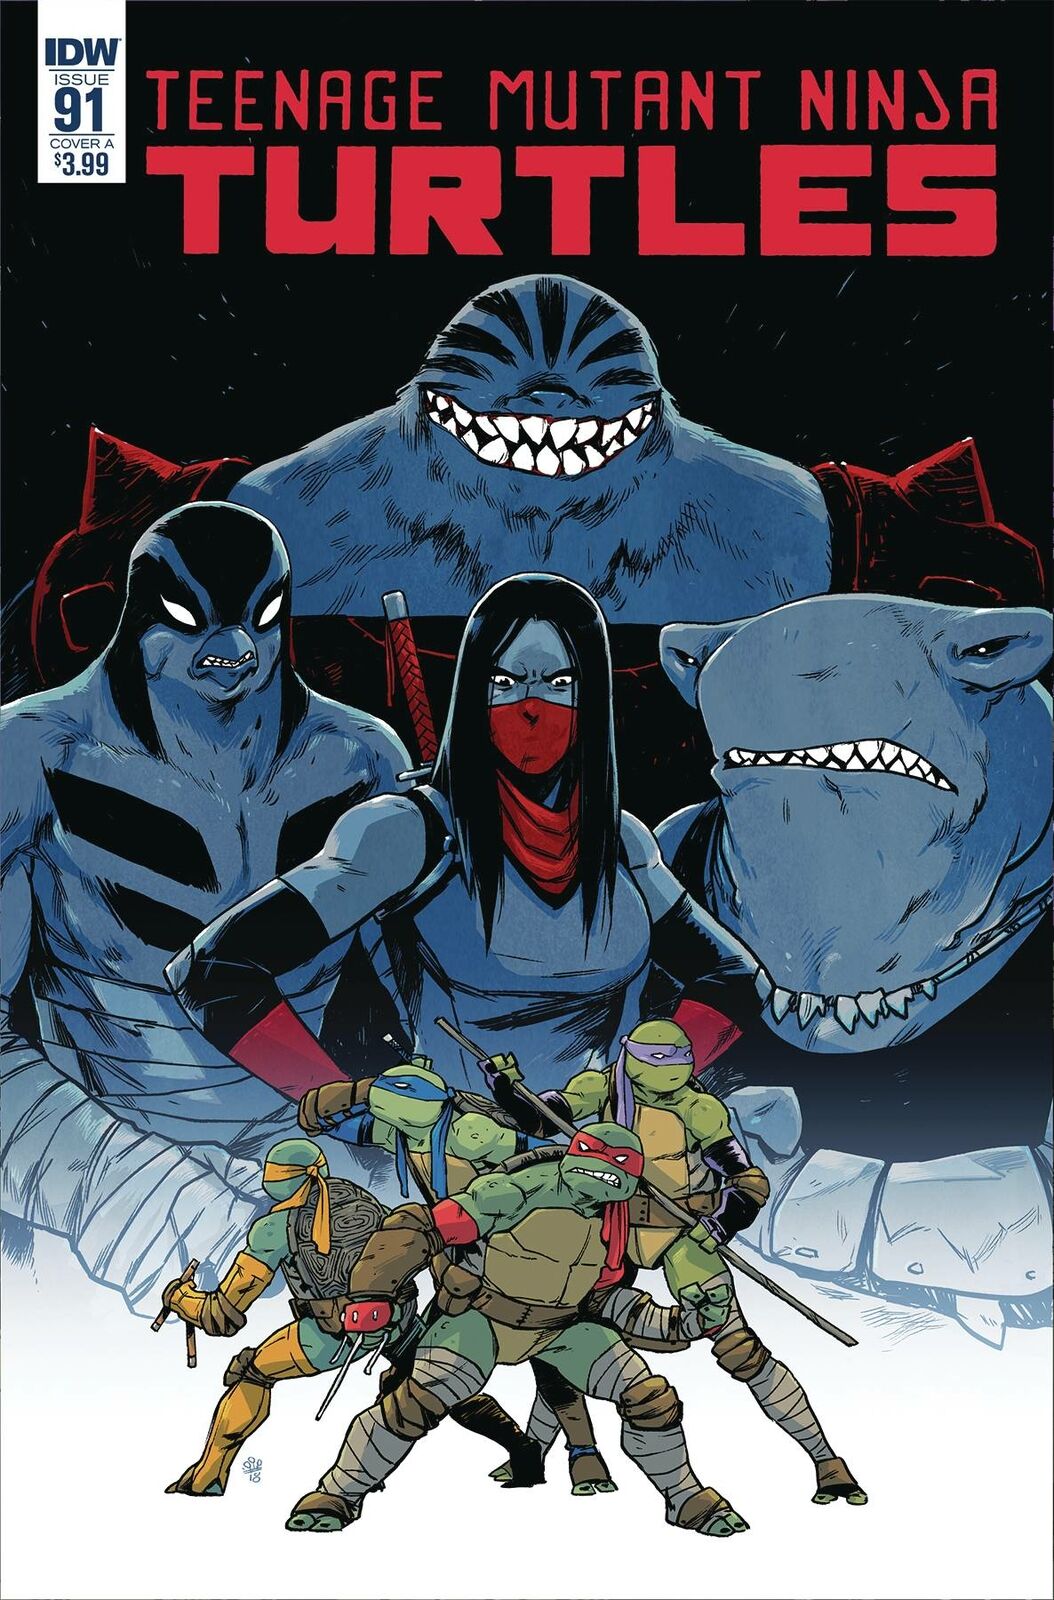 TMNT Ongoing Teenage Mutant Ninja Turtles Select #1-144 | Select Cover 2023 IDW